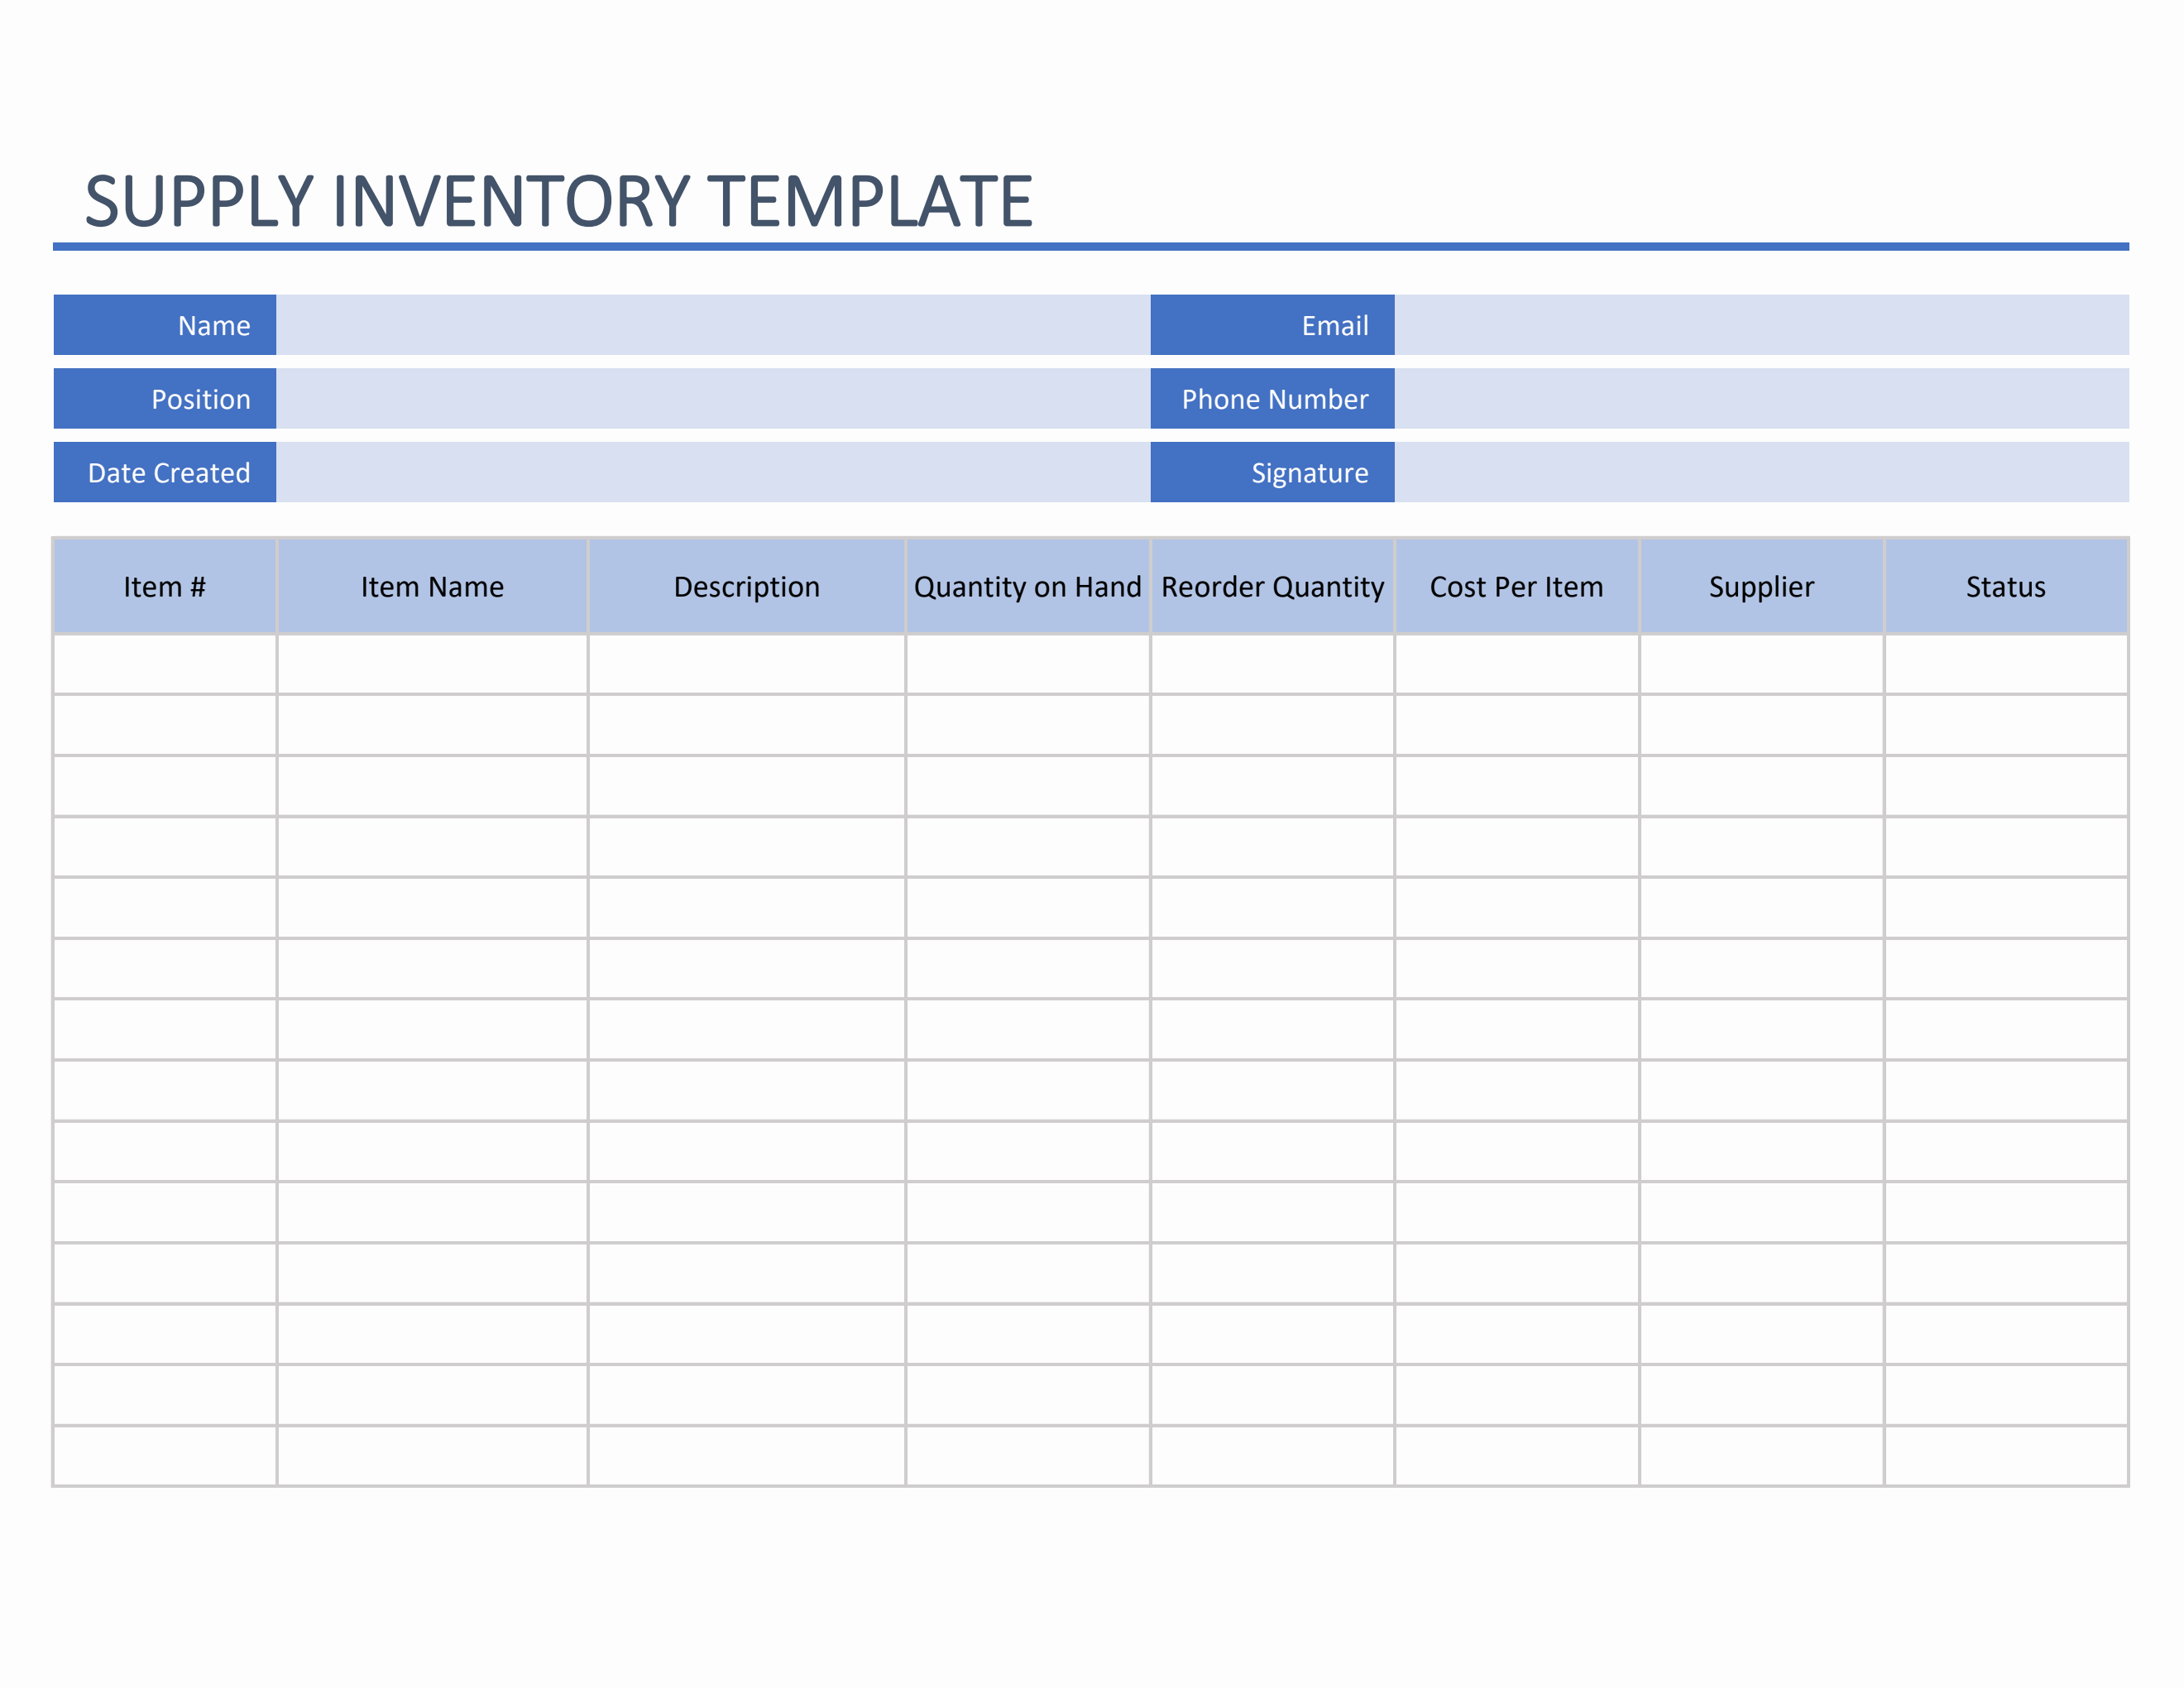 office supplies checklist printable